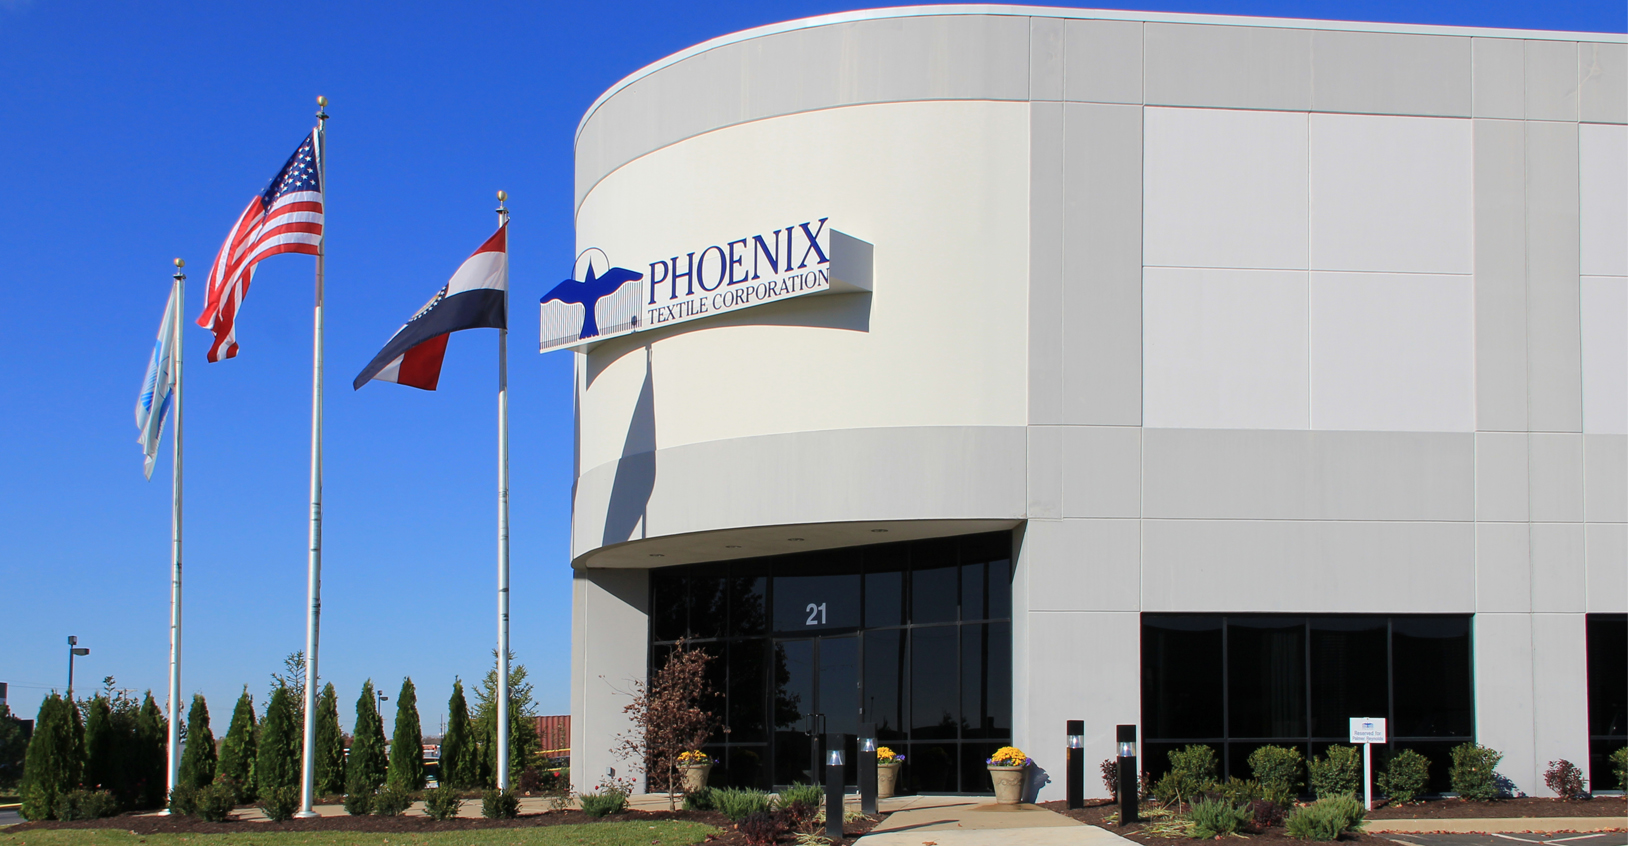 Welcome to Phoenix Textile Corporation